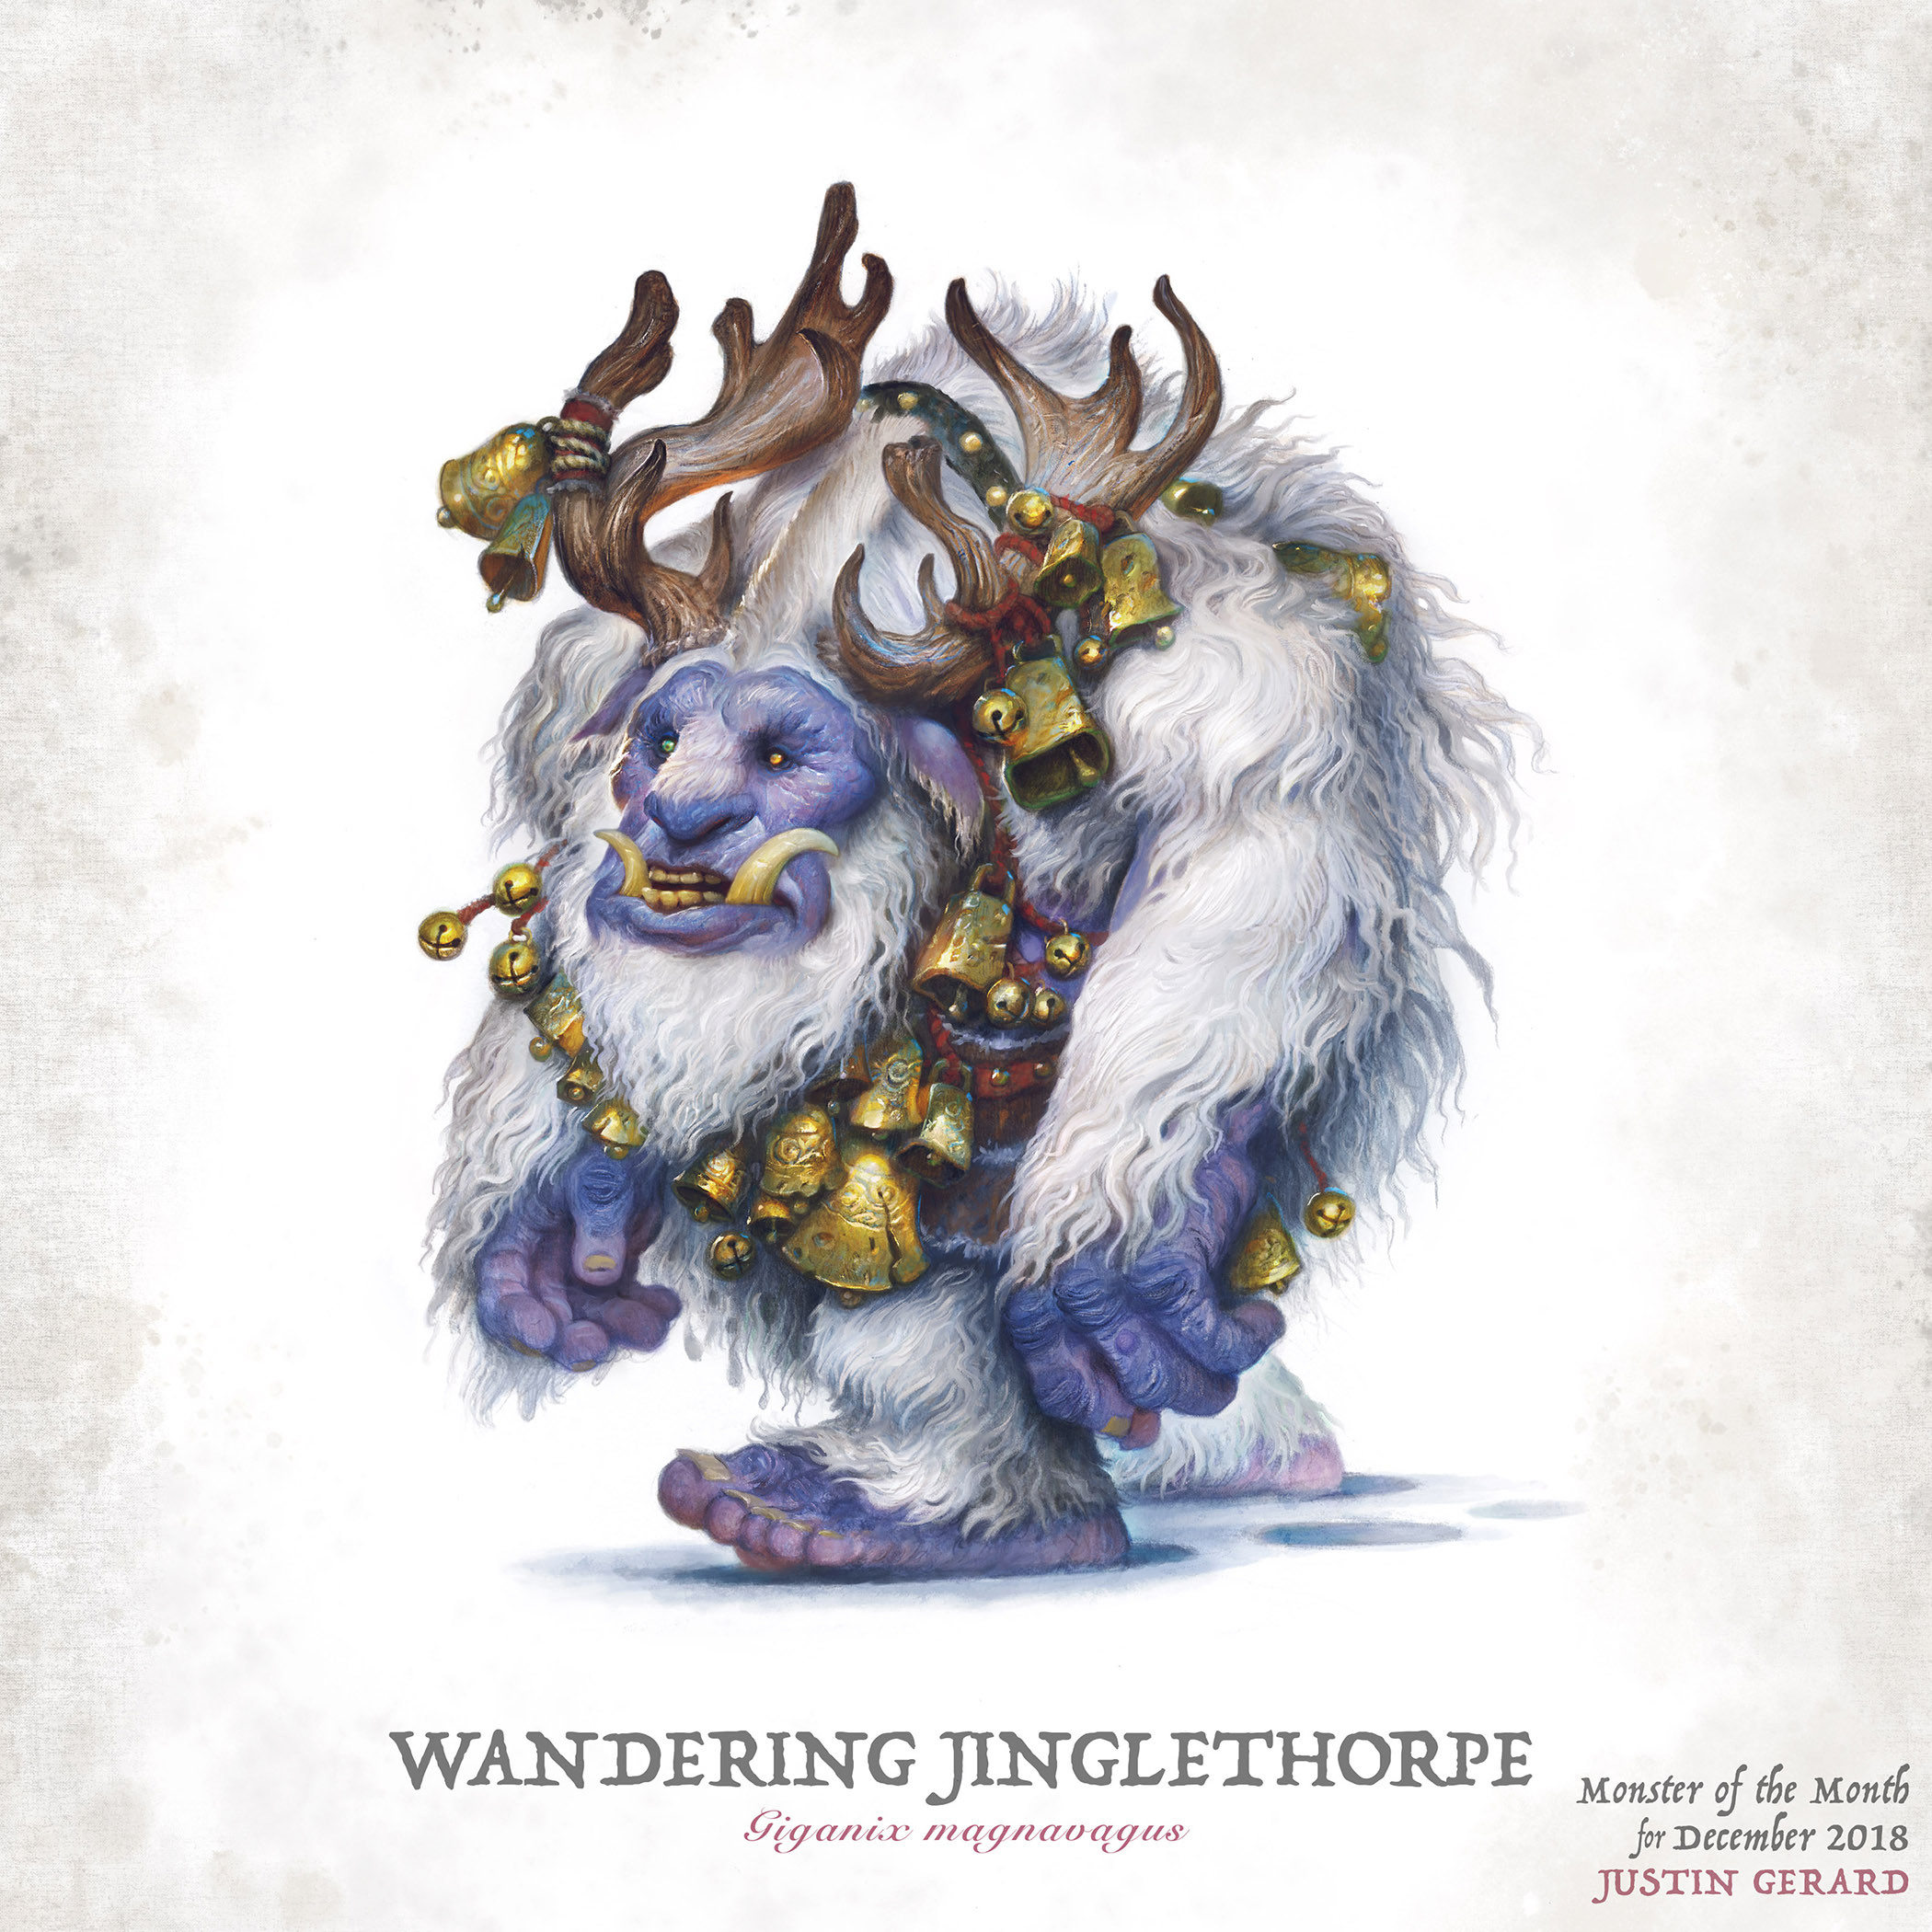 Justin Gerard - "The Wandering Jinglethorpe"